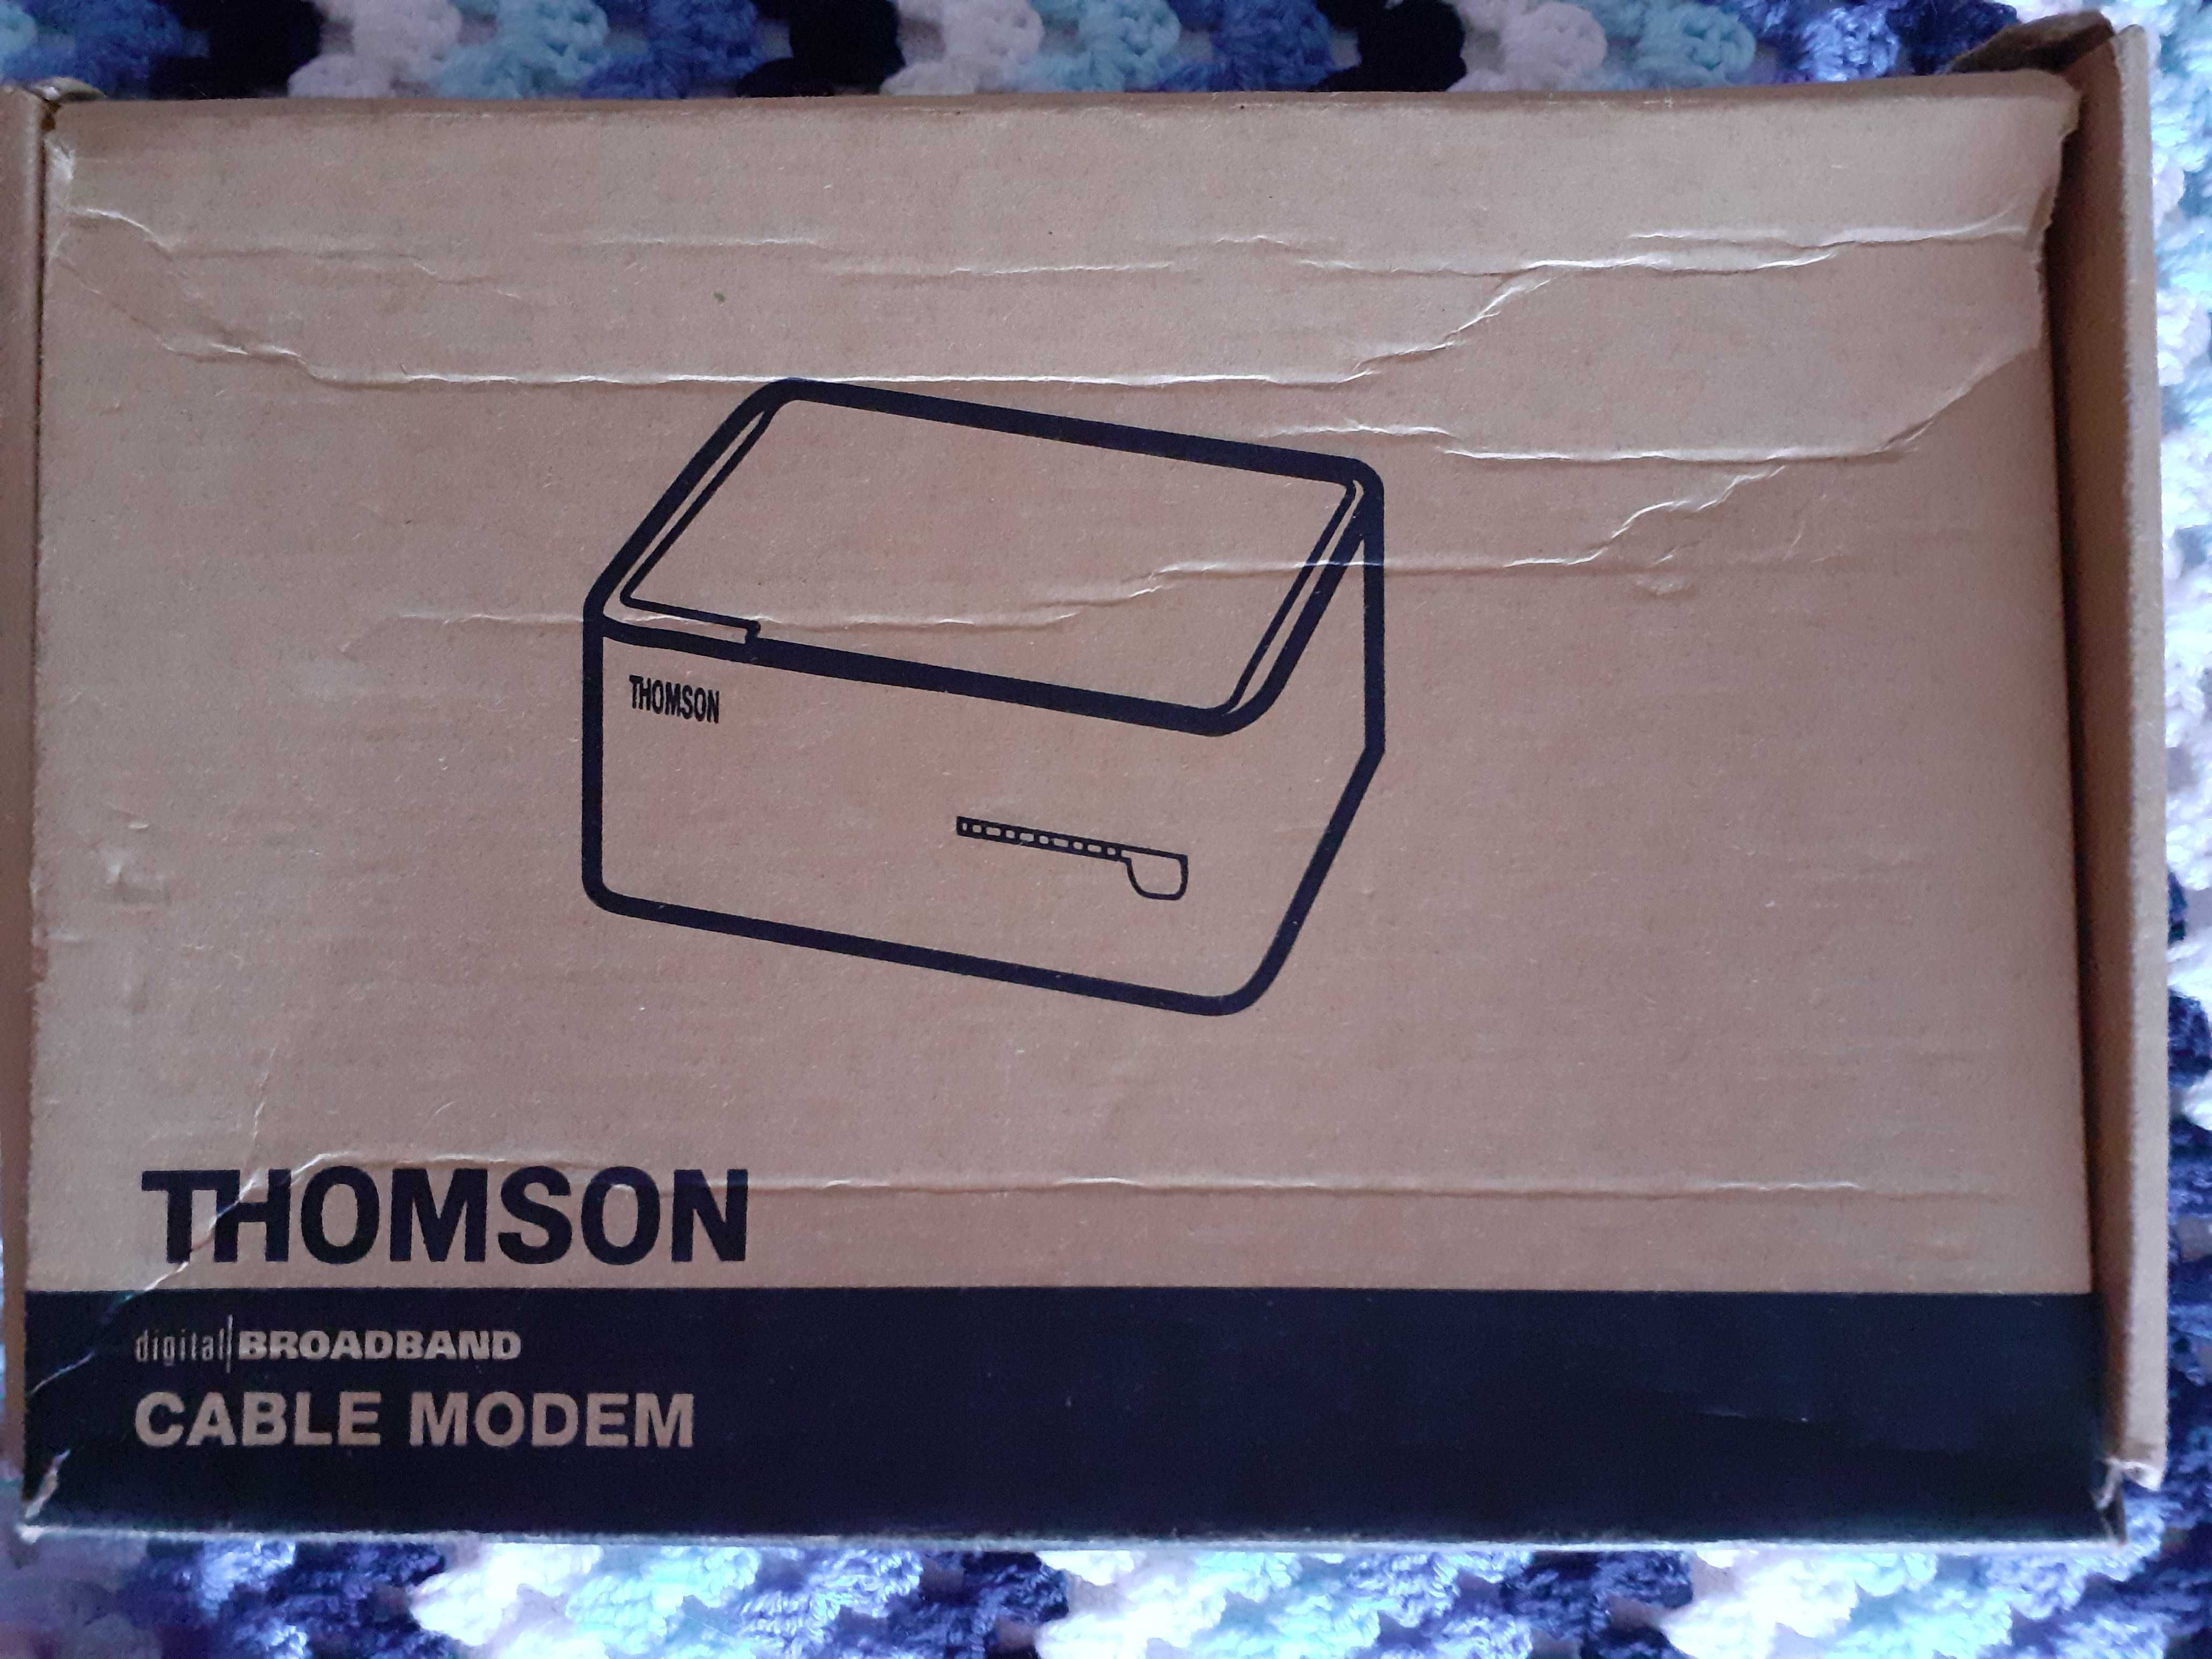 Thomson cable modem